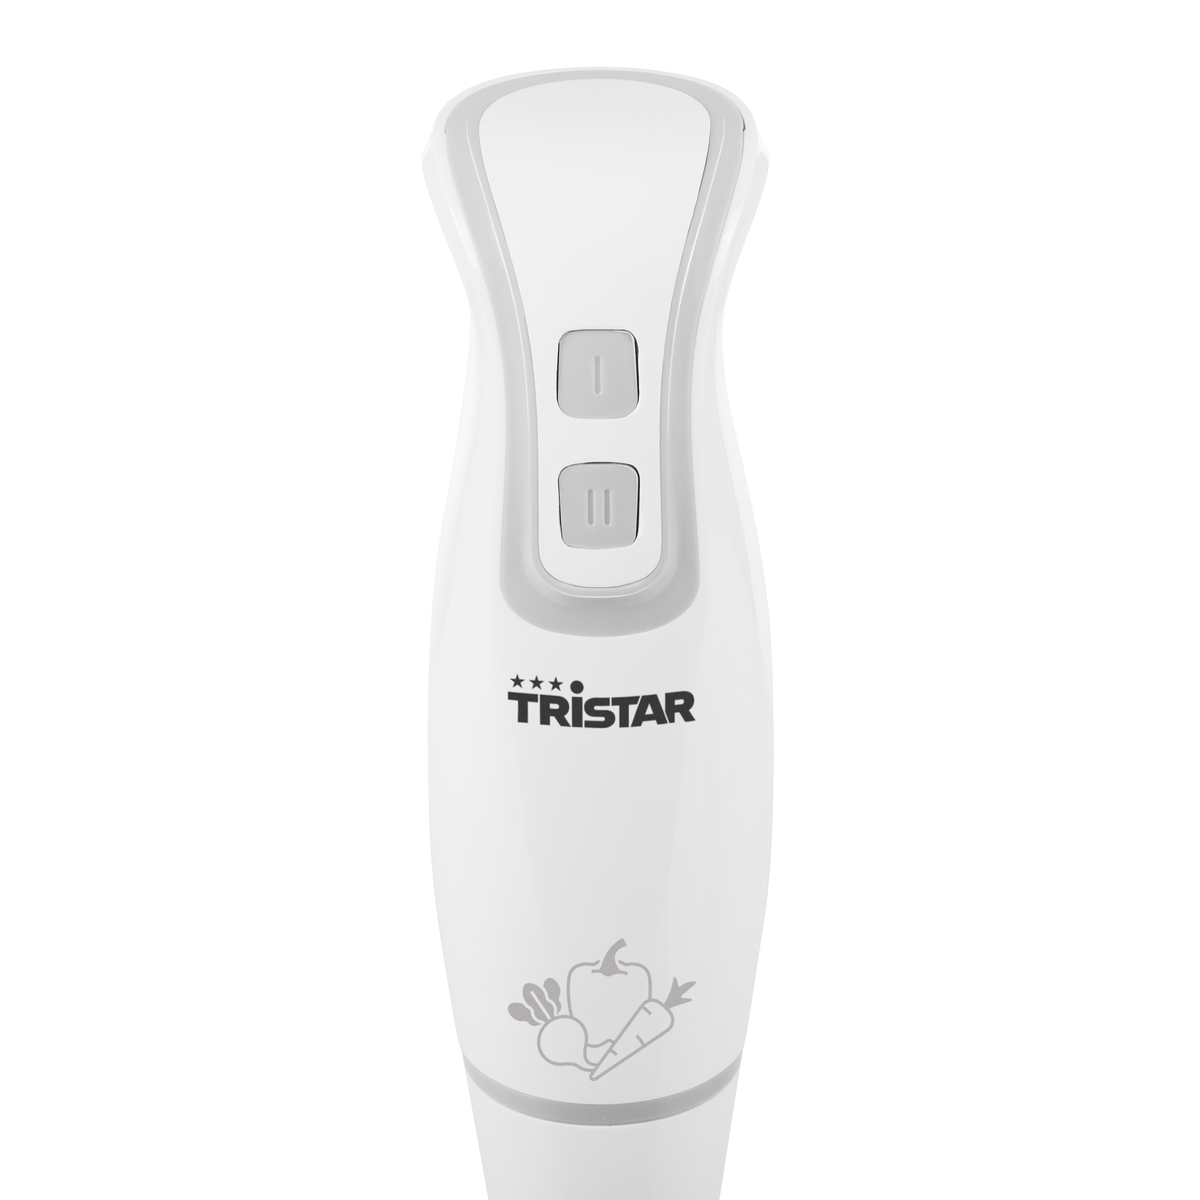 TRISTAR (250 MX-4800 Weiß Watt) Stabmixer